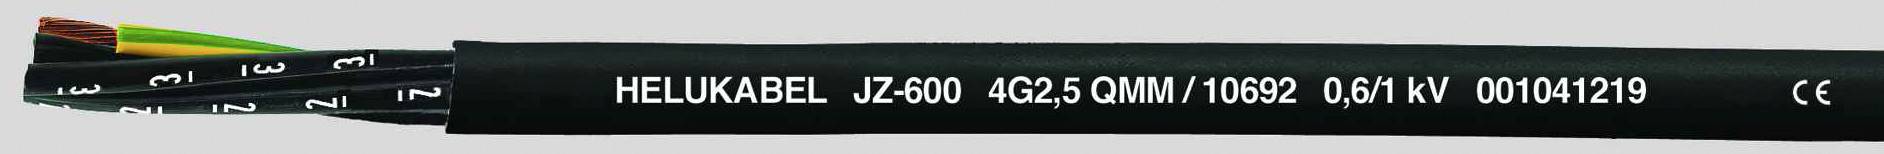 HELUKABEL JZ-600 Steuerleitung 3 G 2.50 mm² Schwarz 10690-1000 1000 m